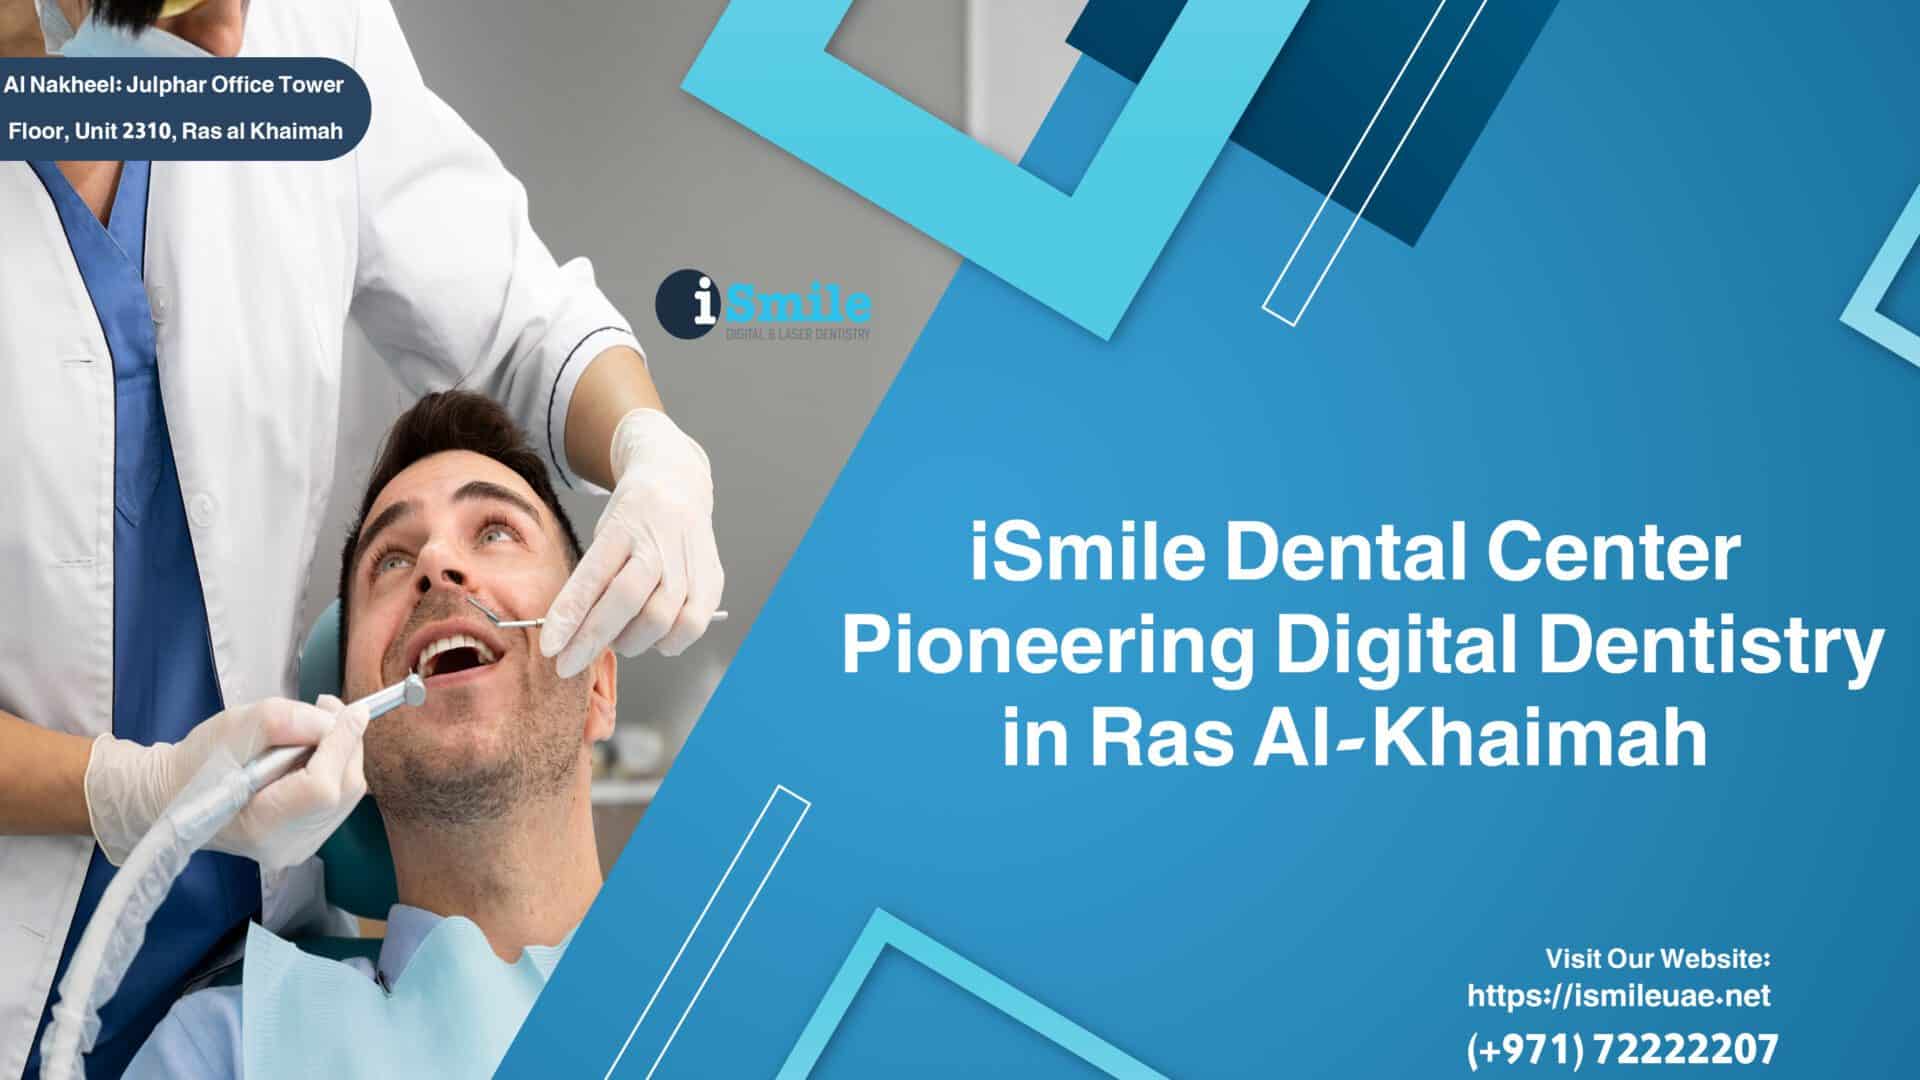 iSmile Dental Center: Pioneering Digital Dentistry in Ras Al-Khaimah